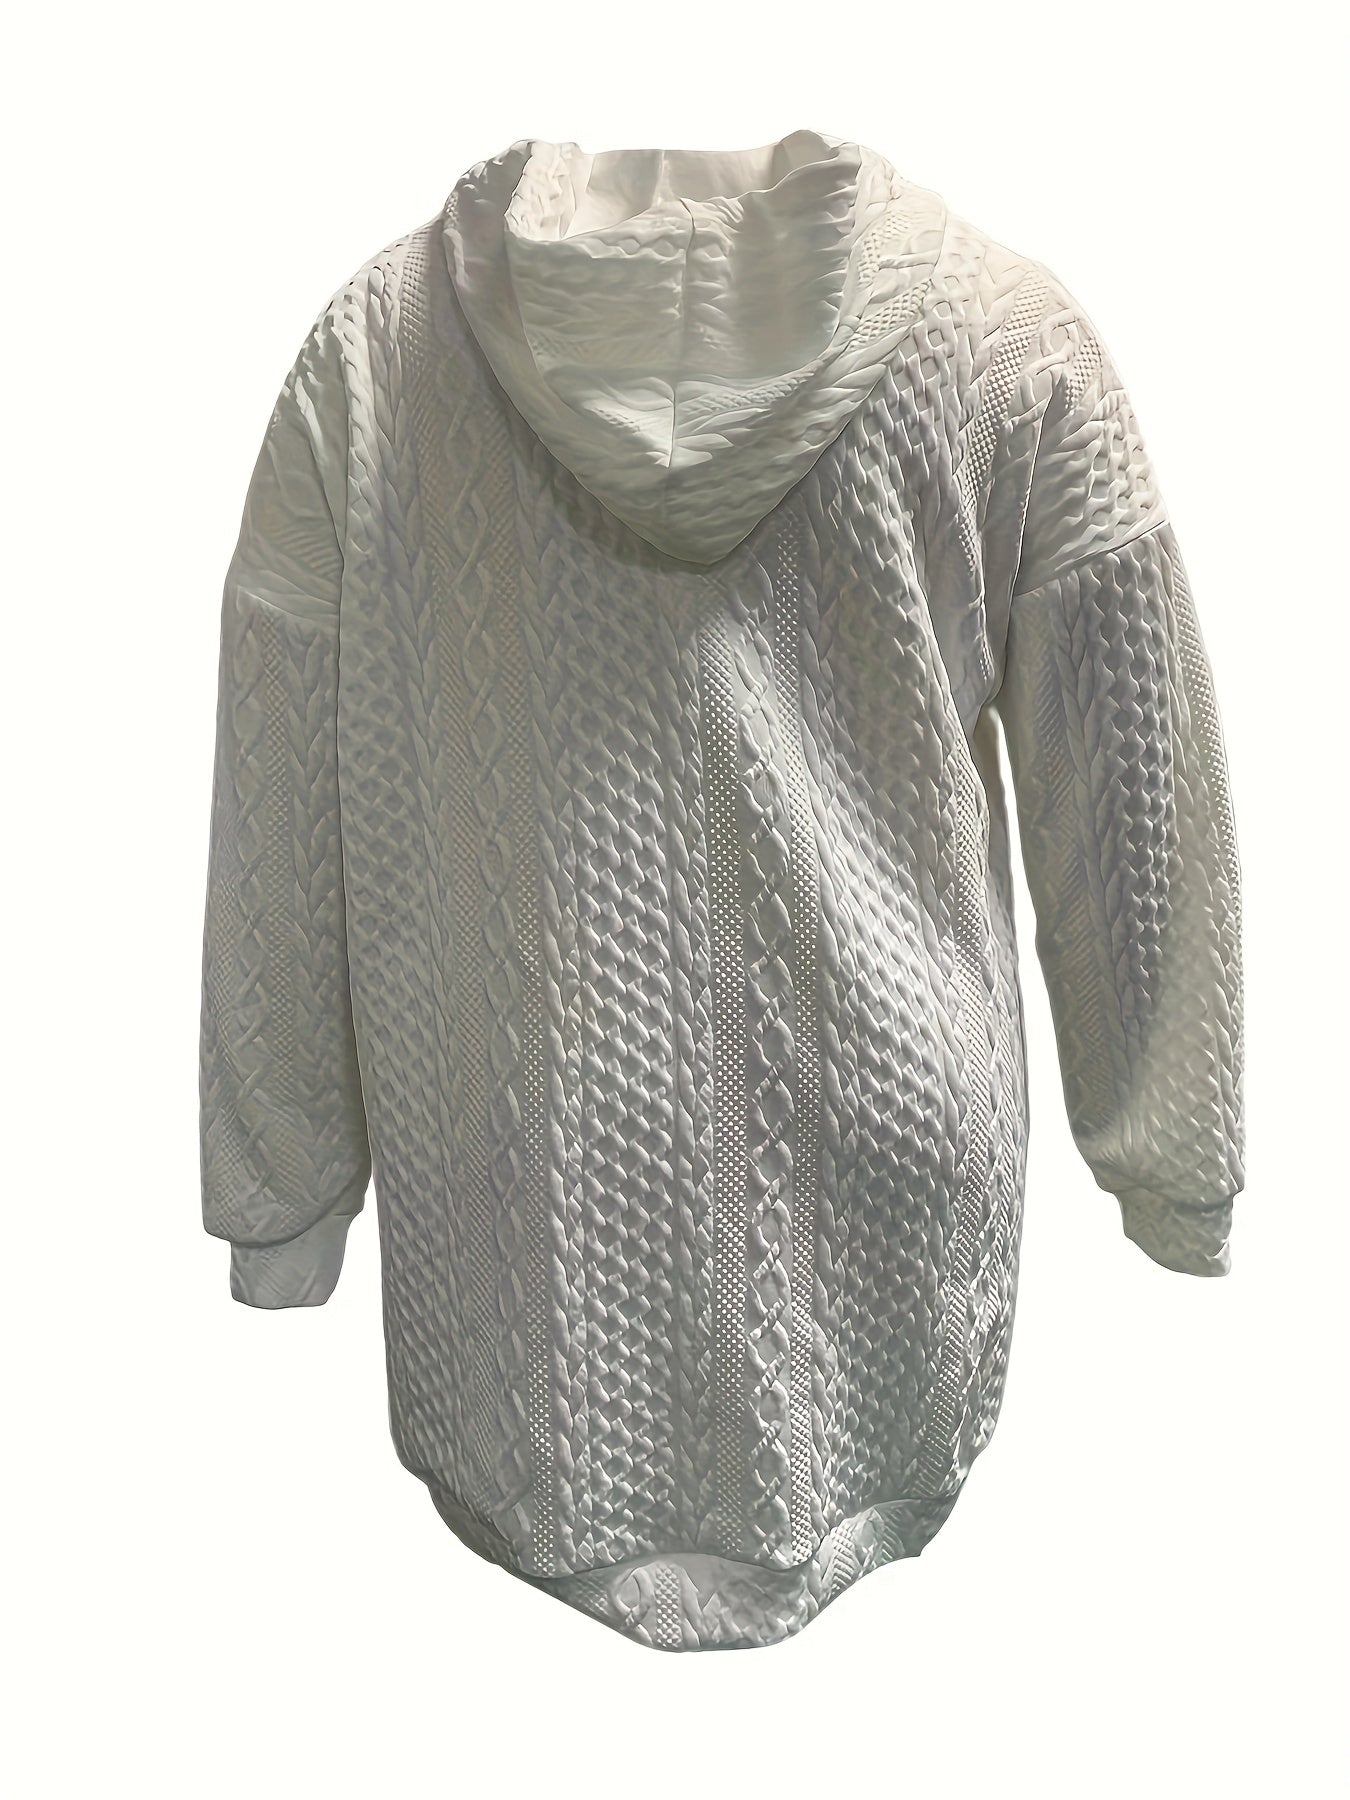 Plus Size Casual Sweatshirt, Women's Plus Solid Cable Long Sleeve Drawstring Hooded Henley Sweatshirt Dress